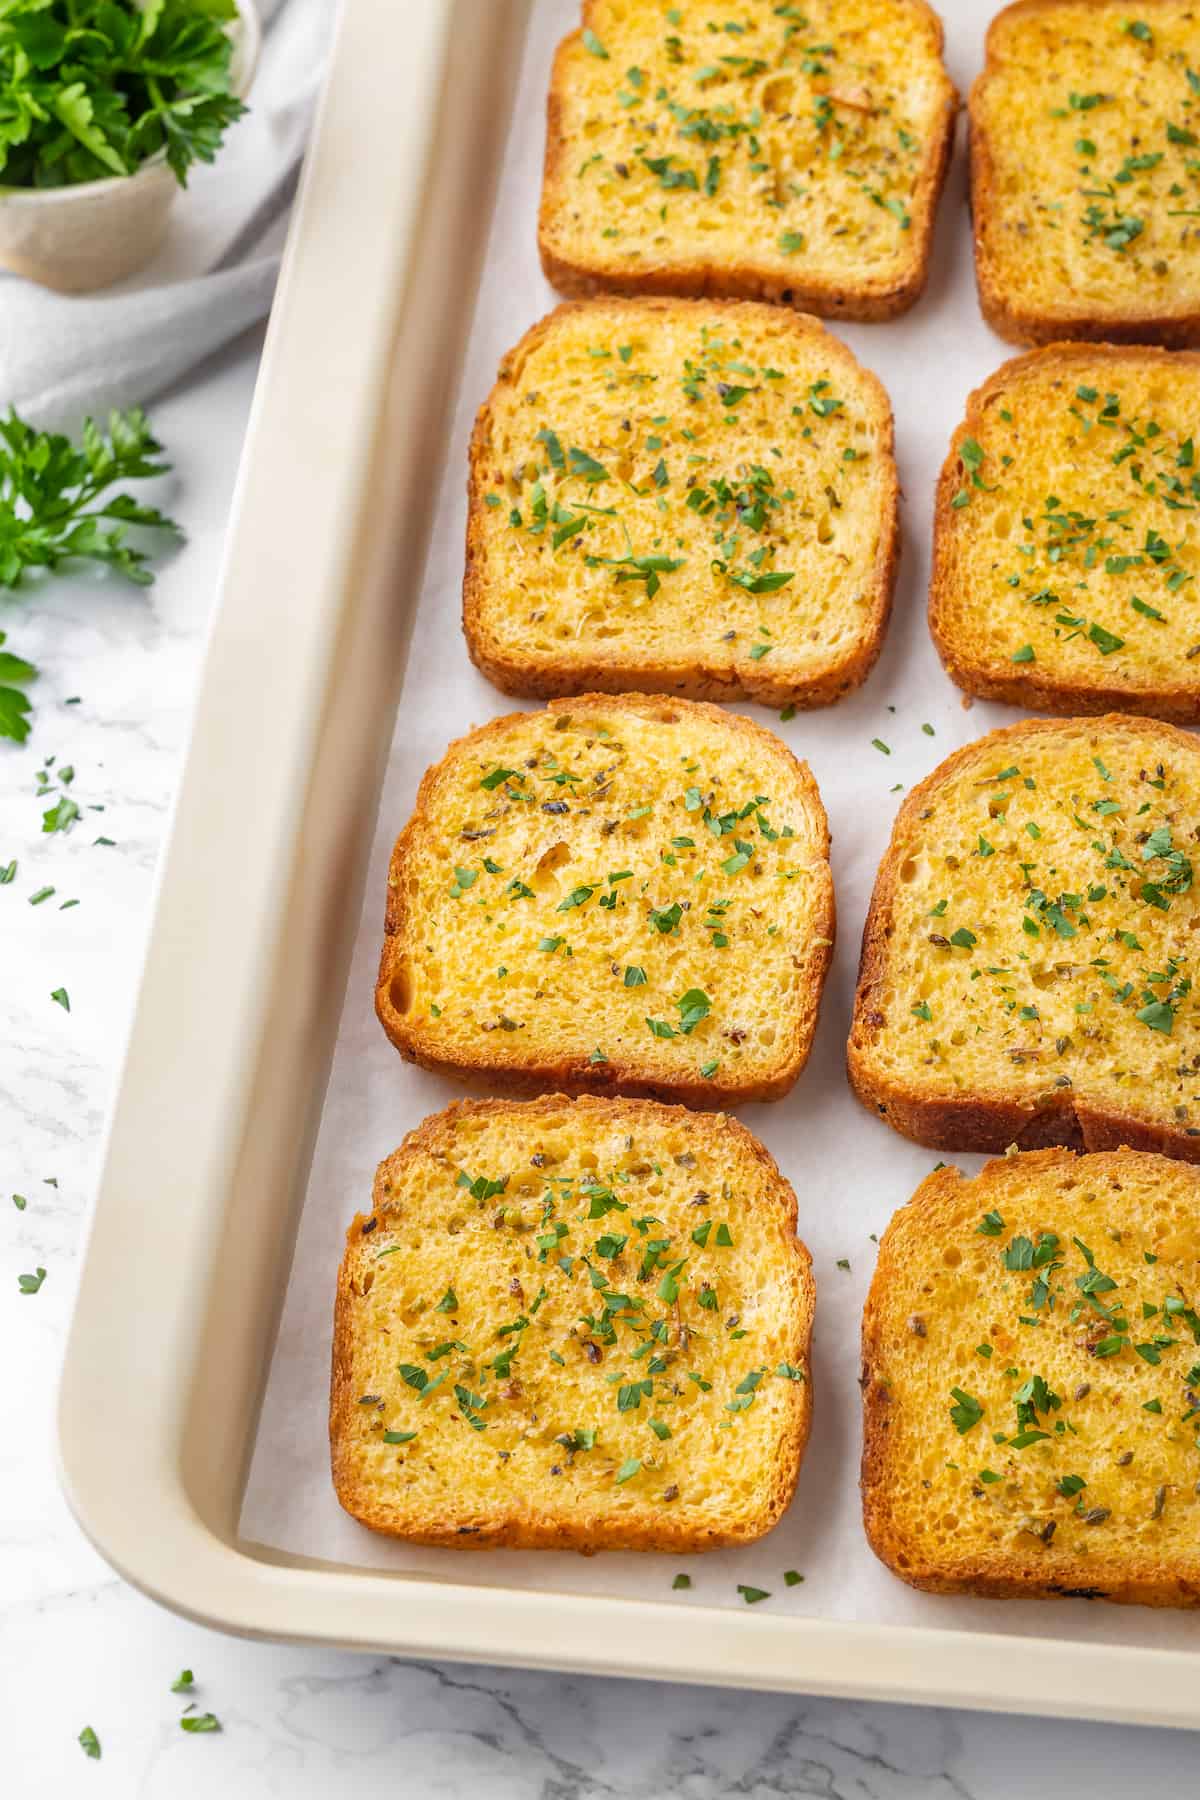 8 slices of Texas toast on sheet pan